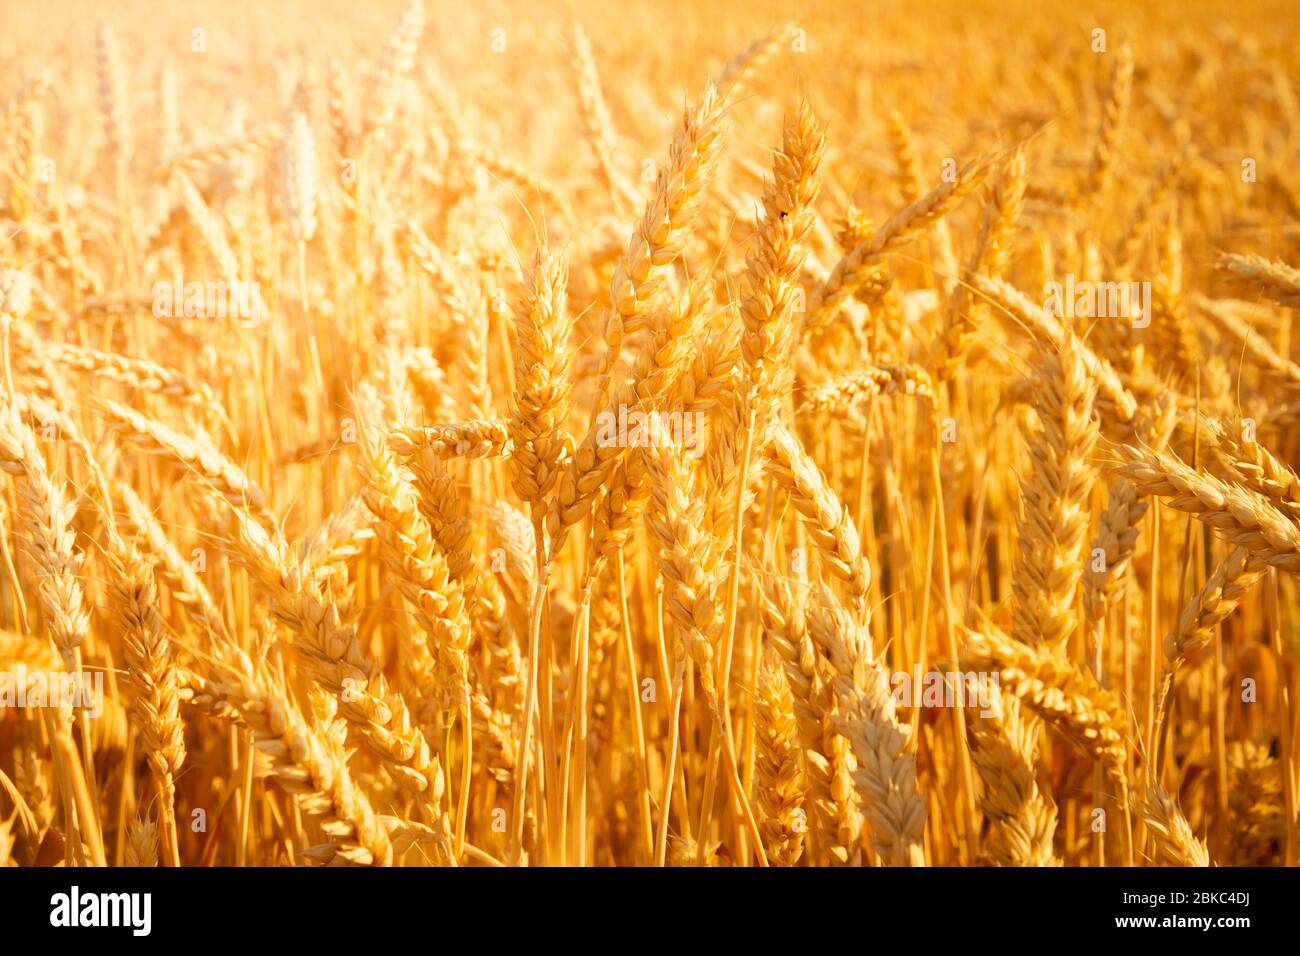 closeup of ripe wheat ears on wheat field Stock Photo